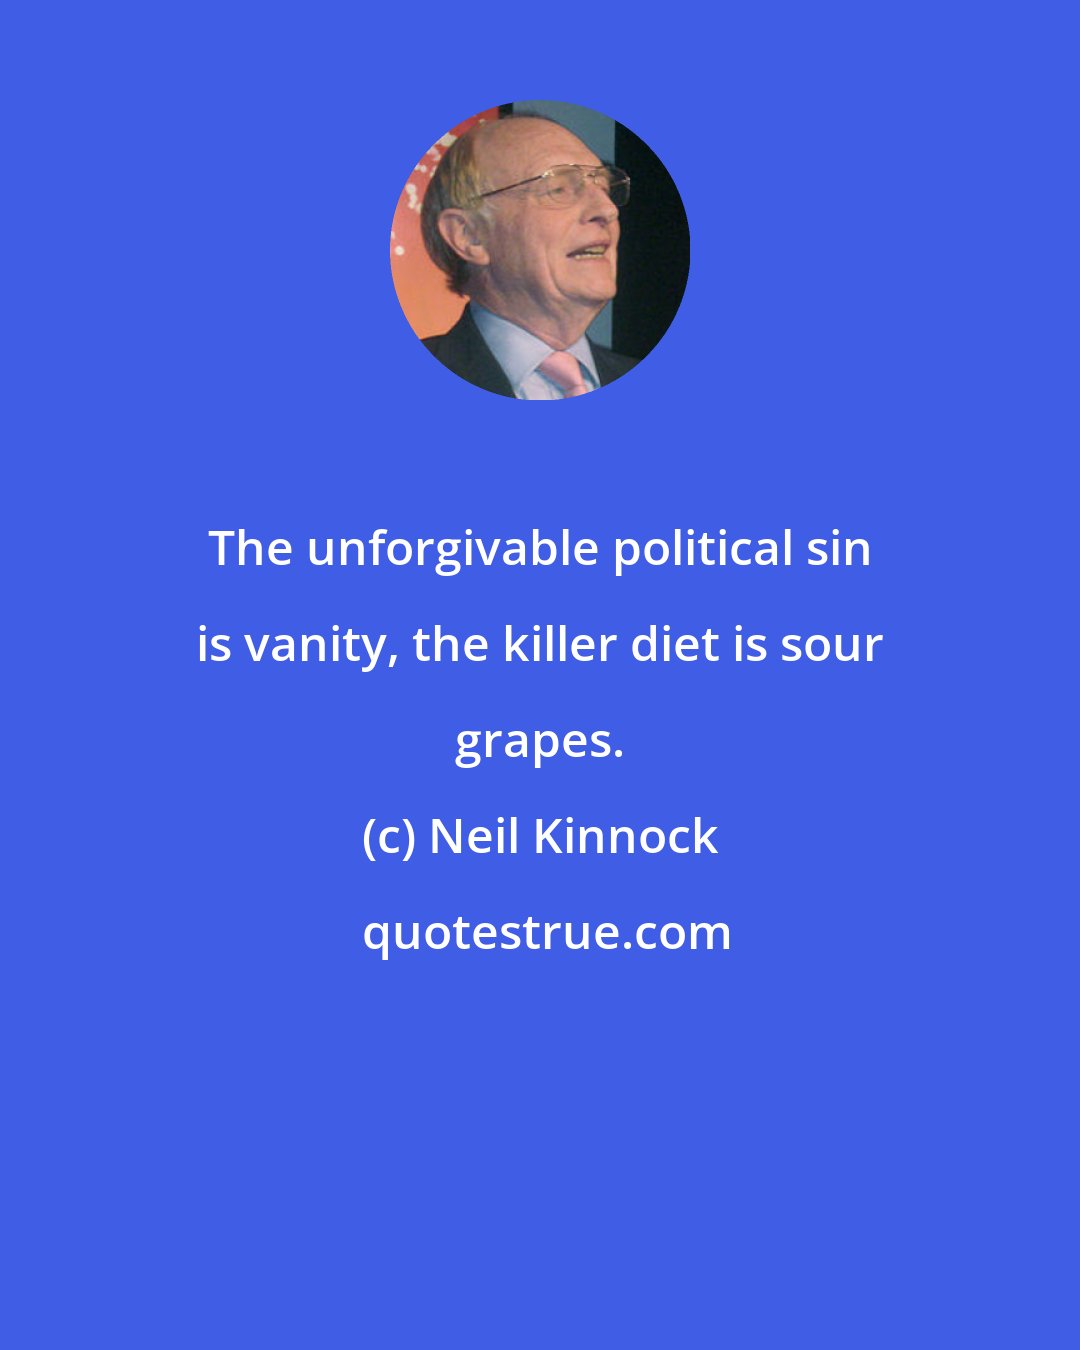 Neil Kinnock: The unforgivable political sin is vanity, the killer diet is sour grapes.